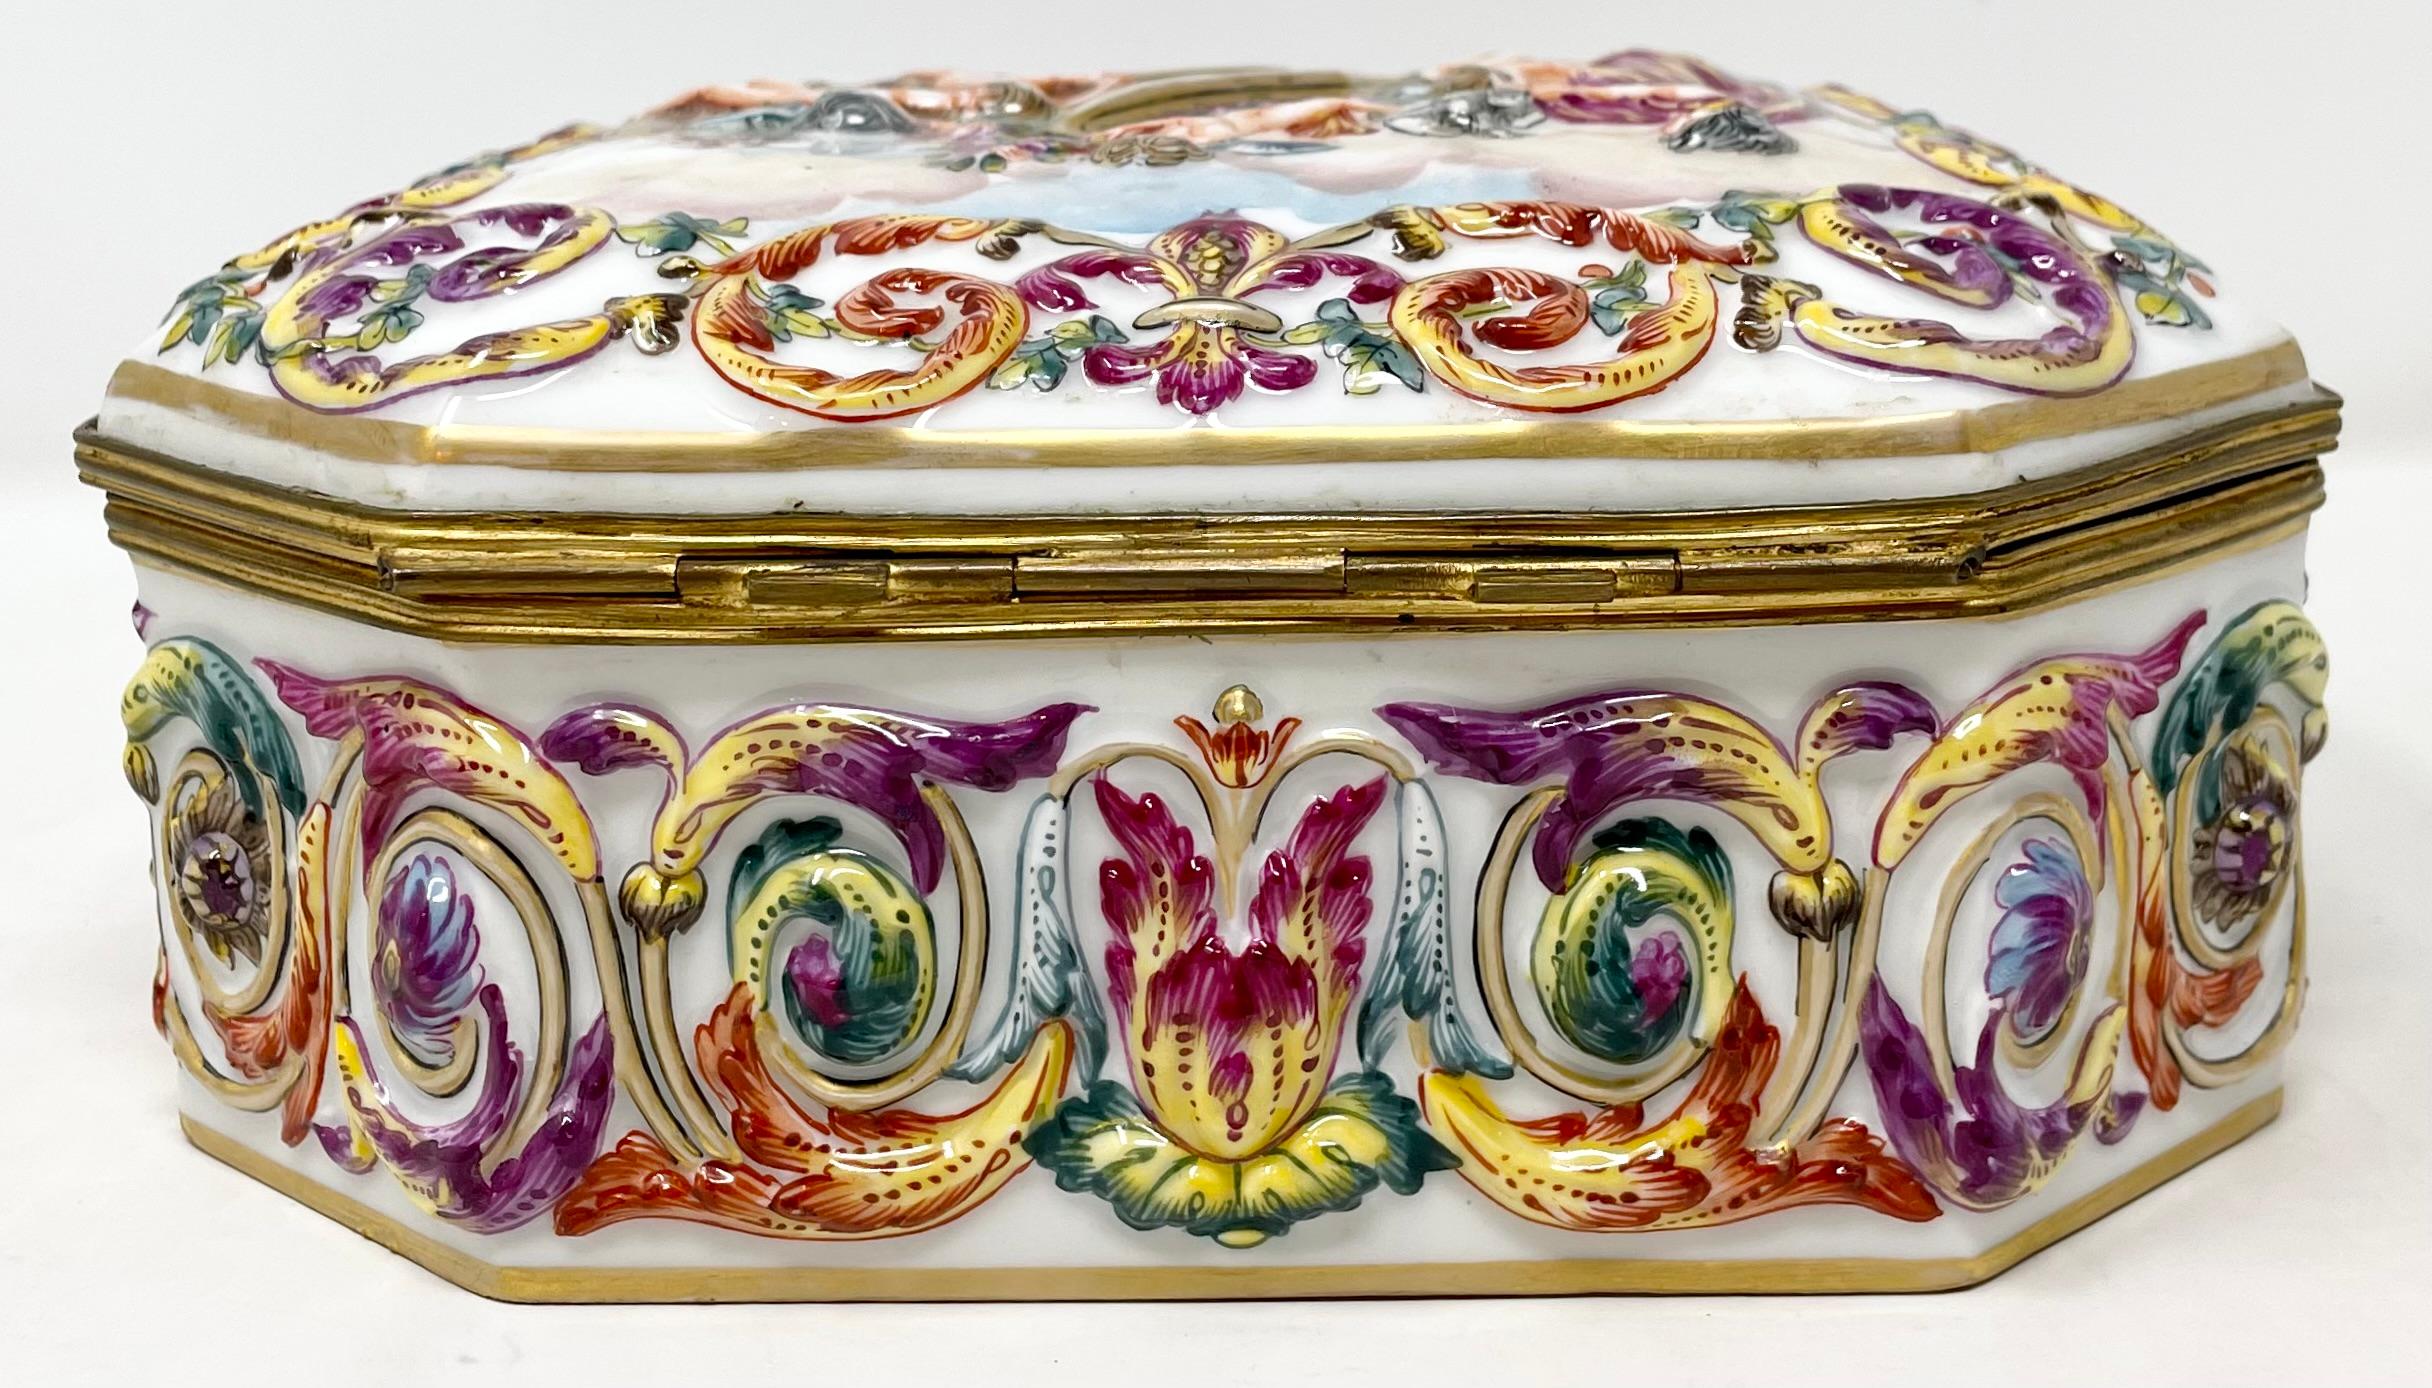 Antique Italian Capo di Monte Porcelain Hand-Painted Jewel Box, Circa 1900's For Sale 1